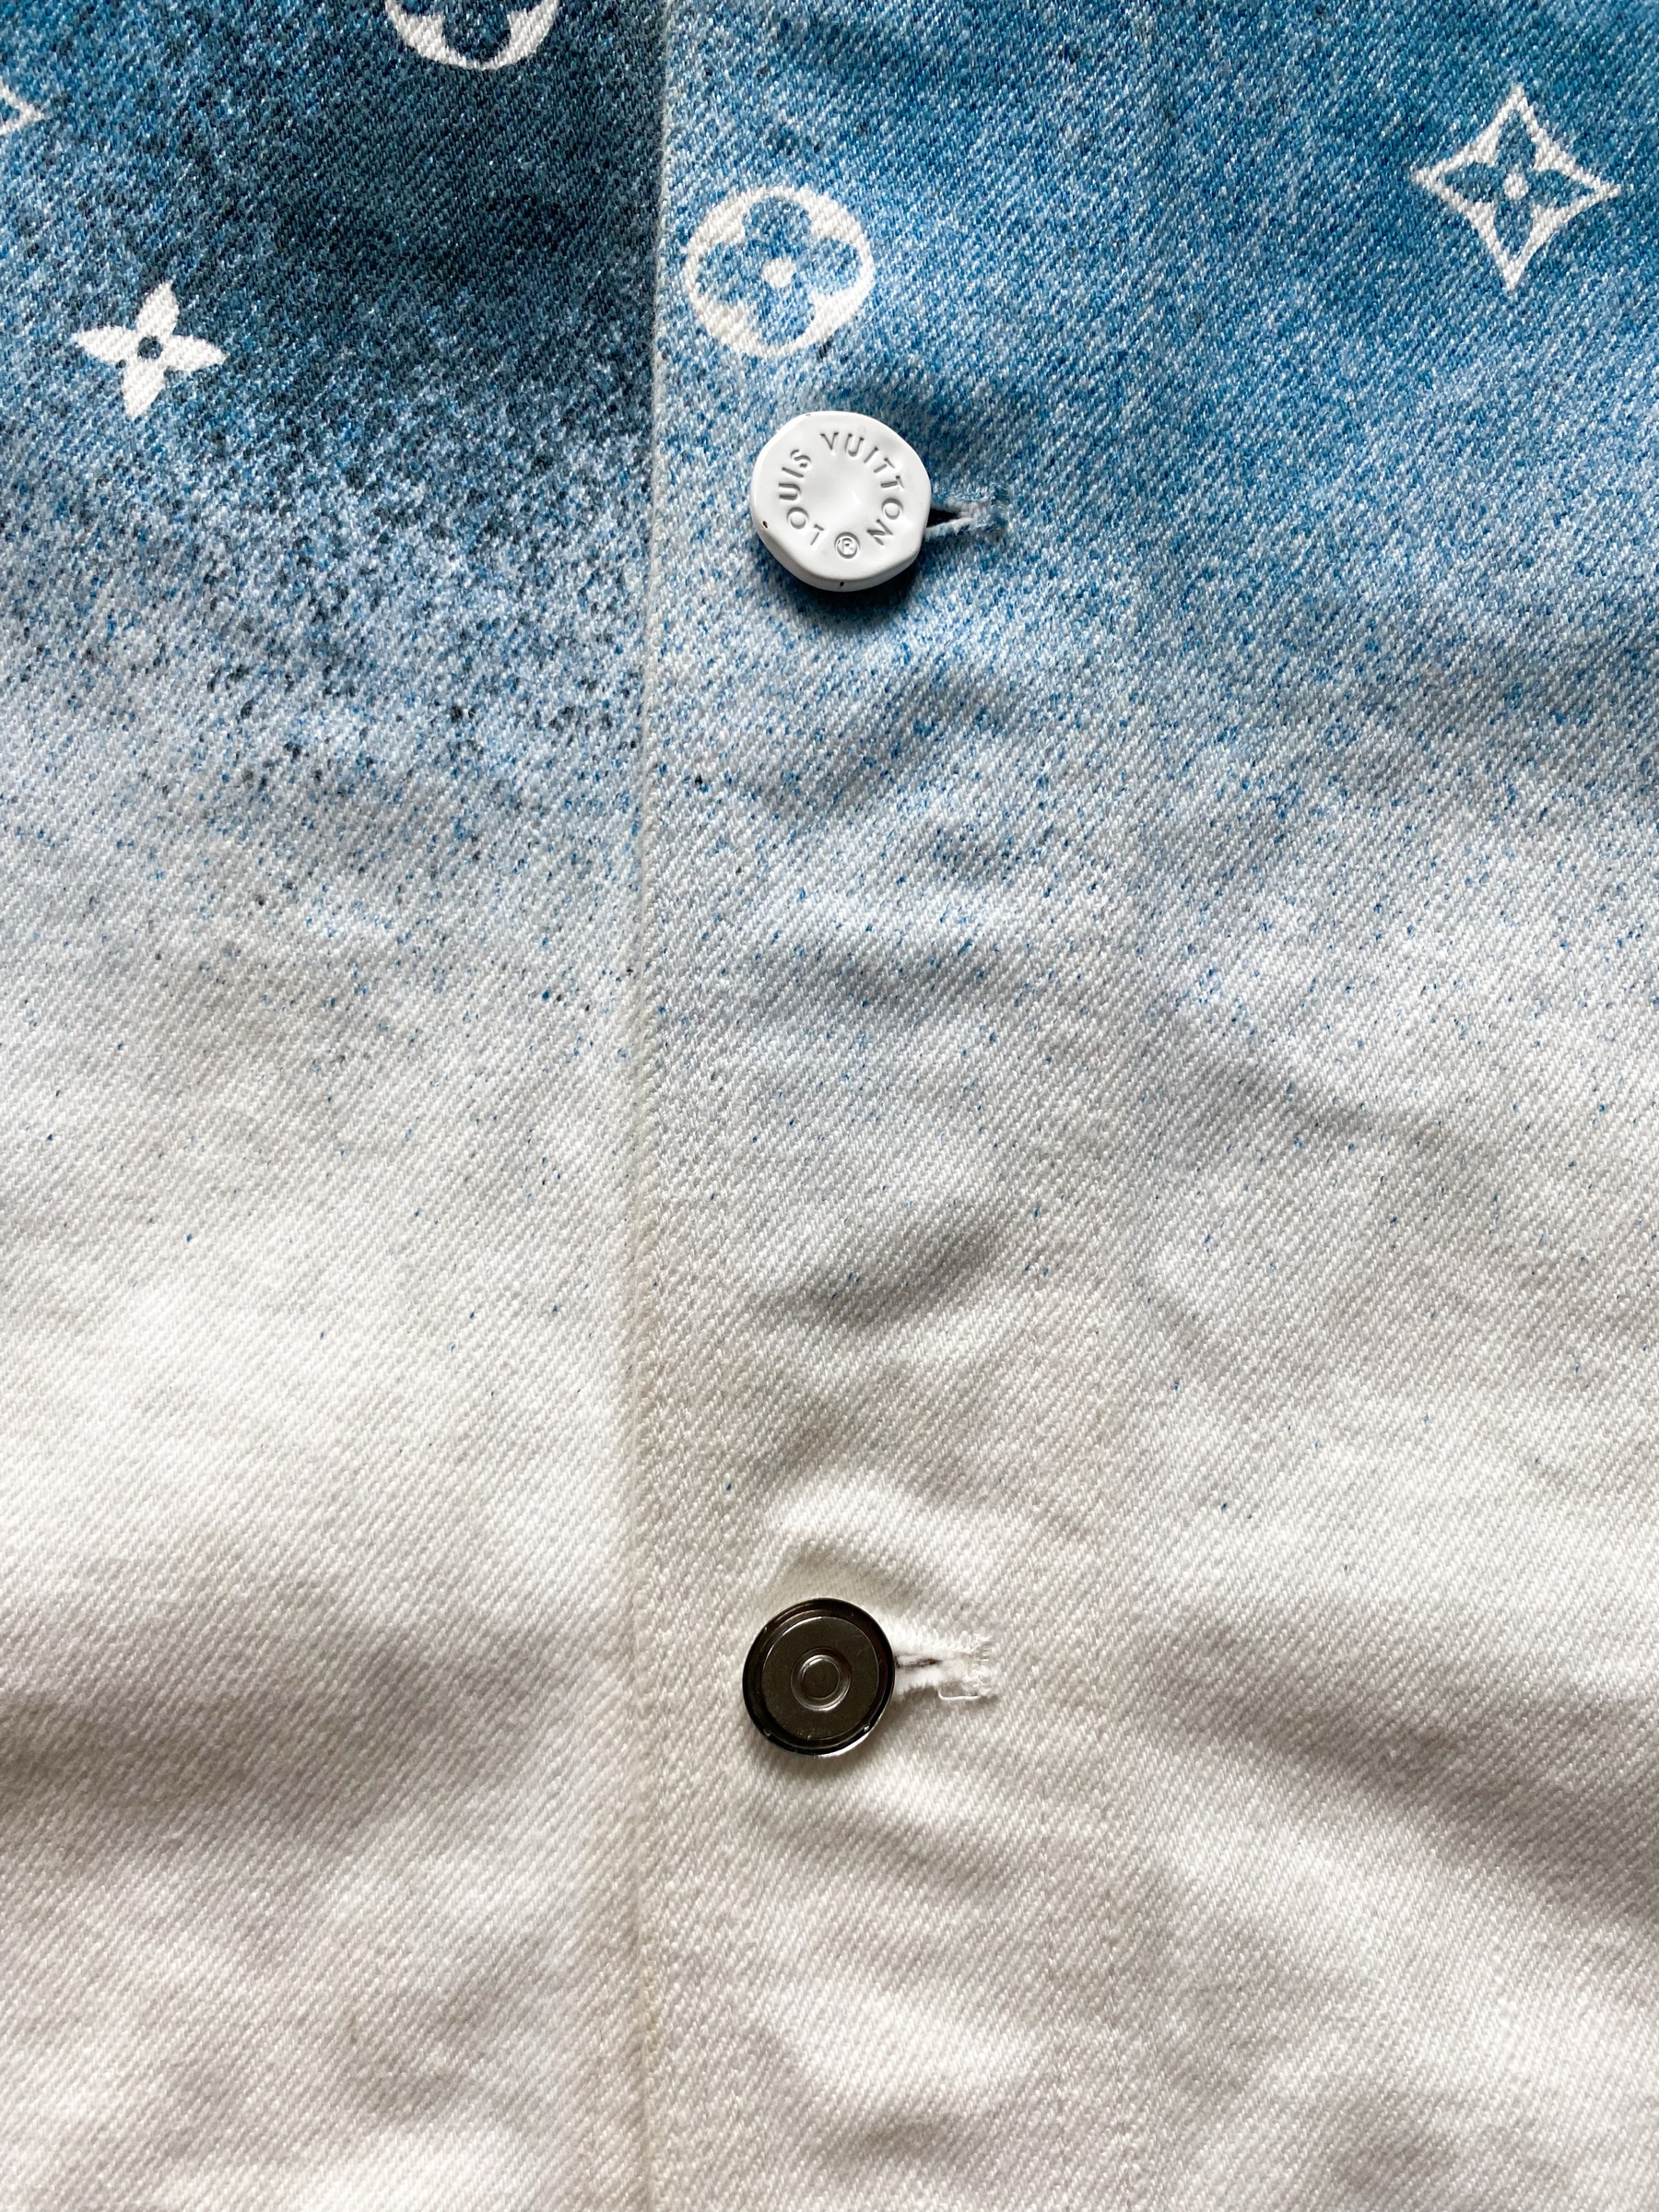 Louis Vuitton Blue & White Gradient Snowfall Monogram Denim Jacket